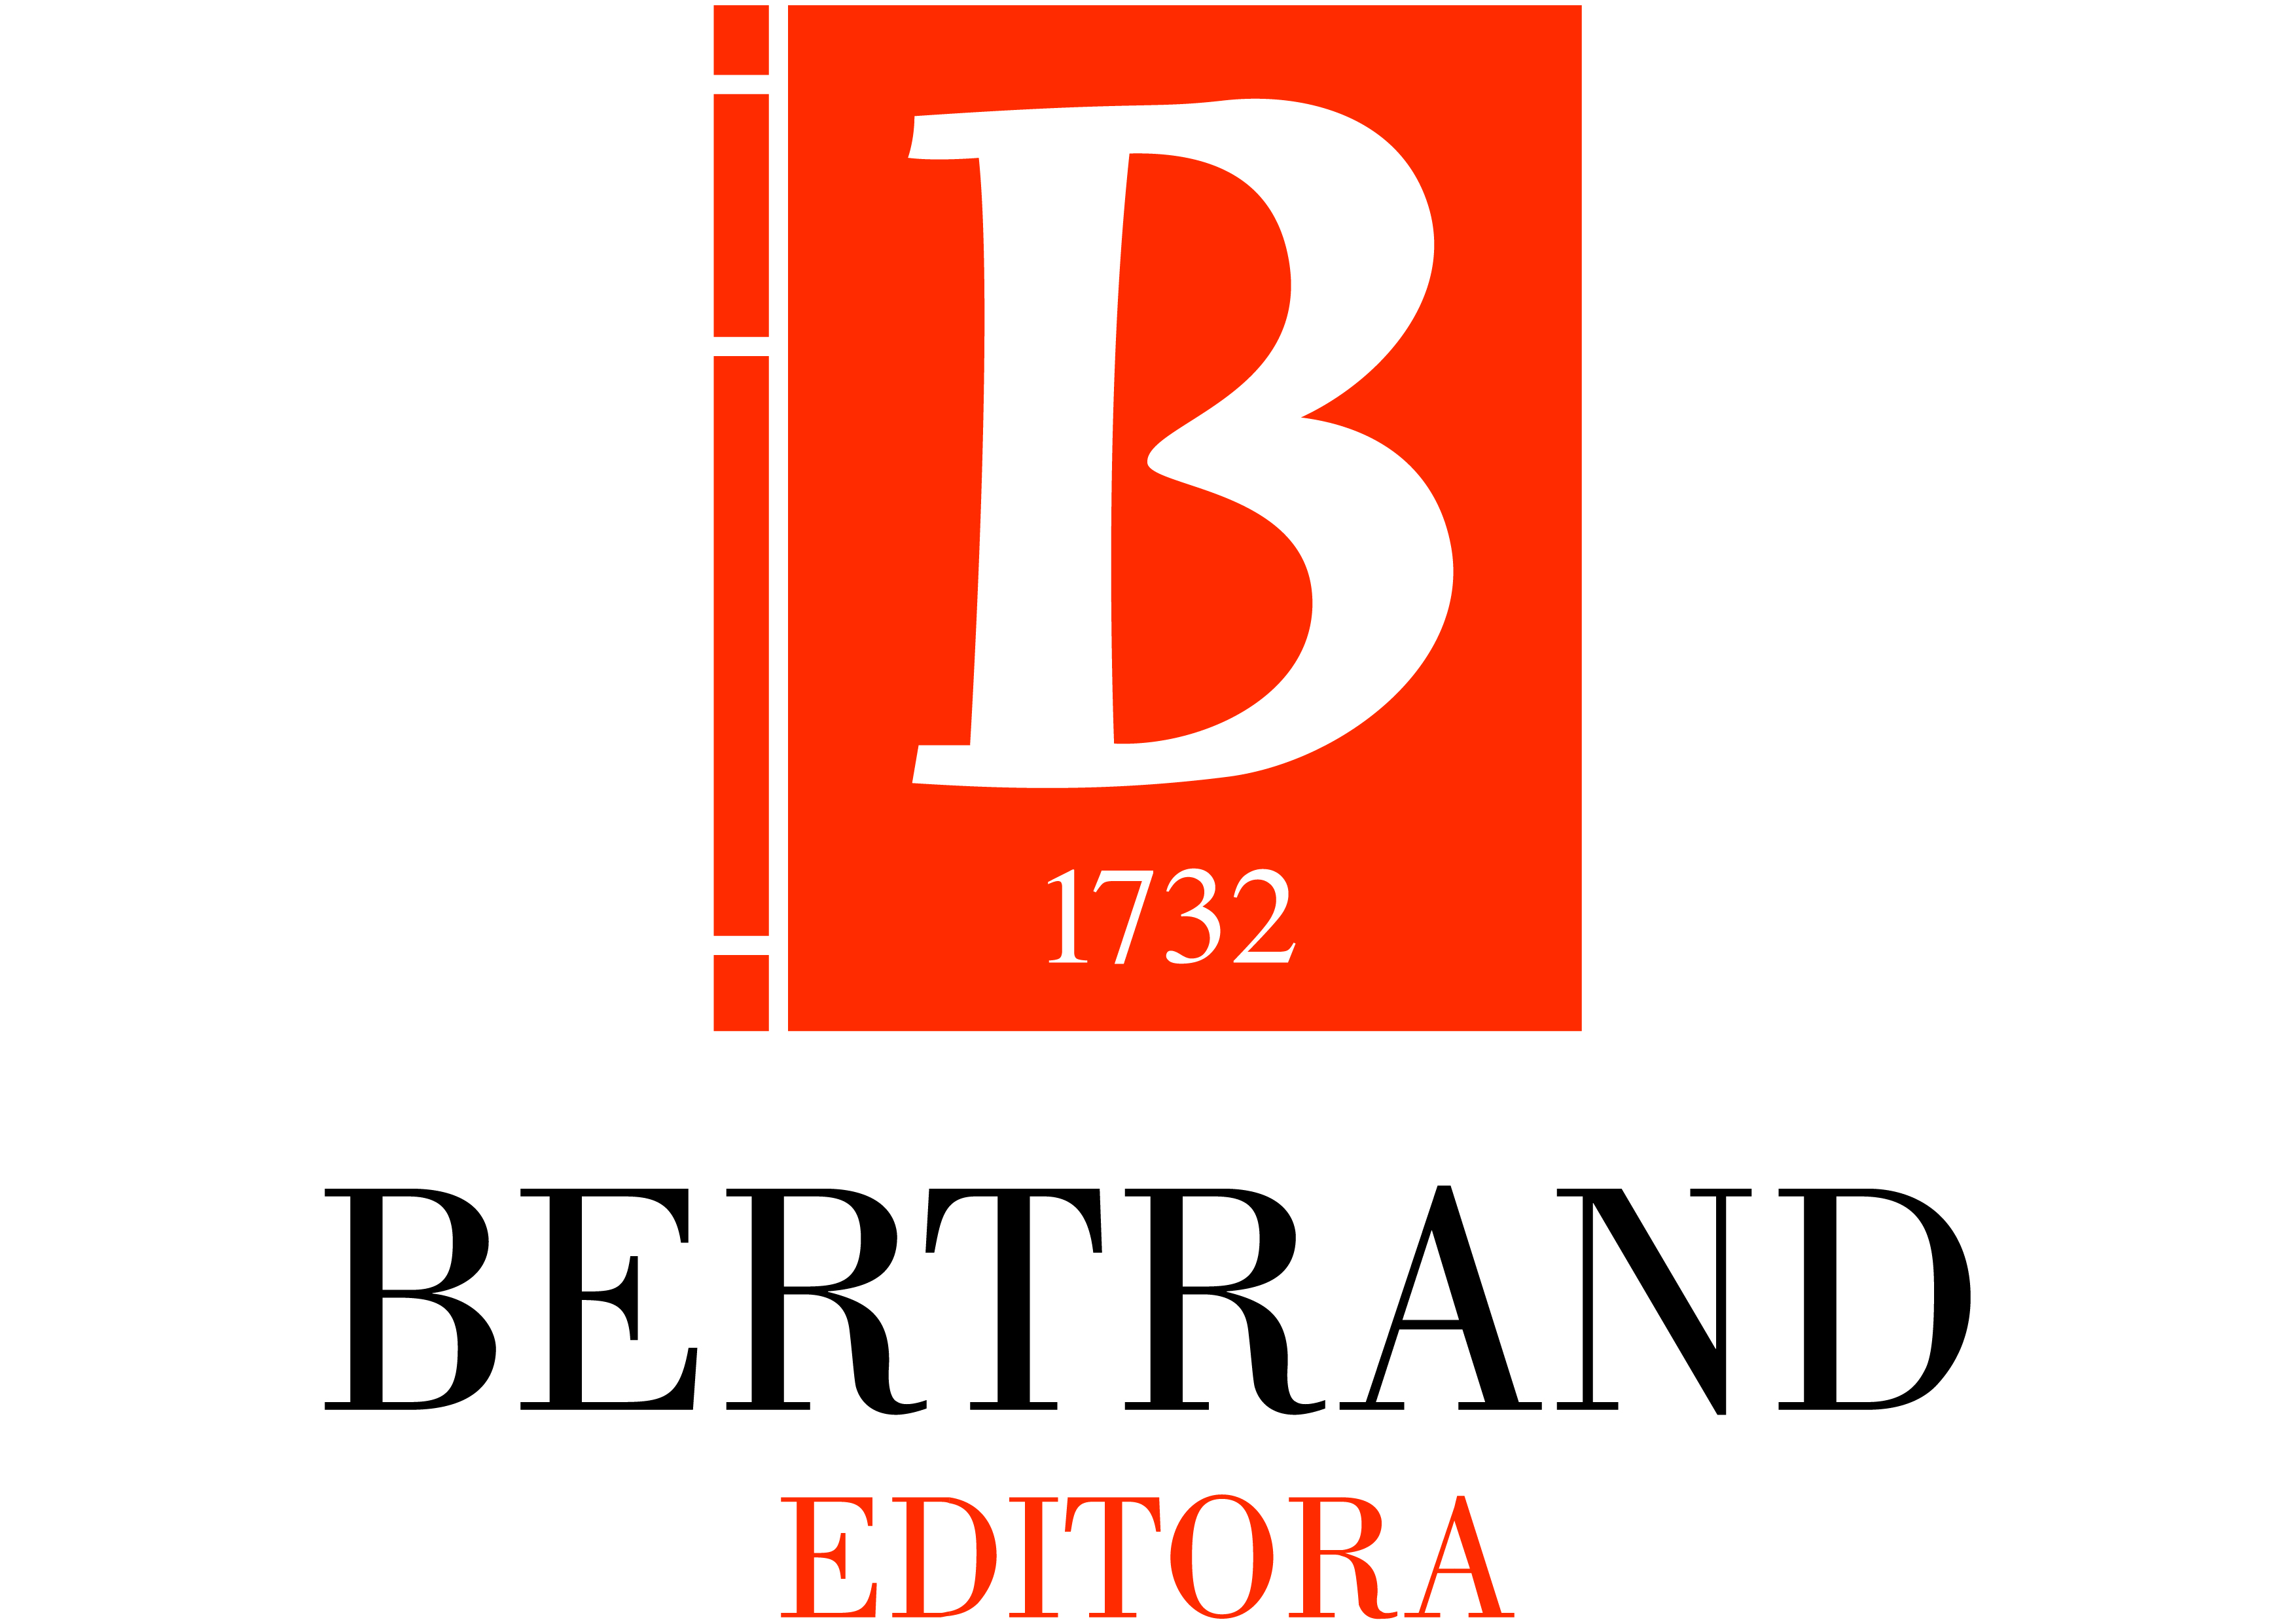 BERTRAND EDITORA